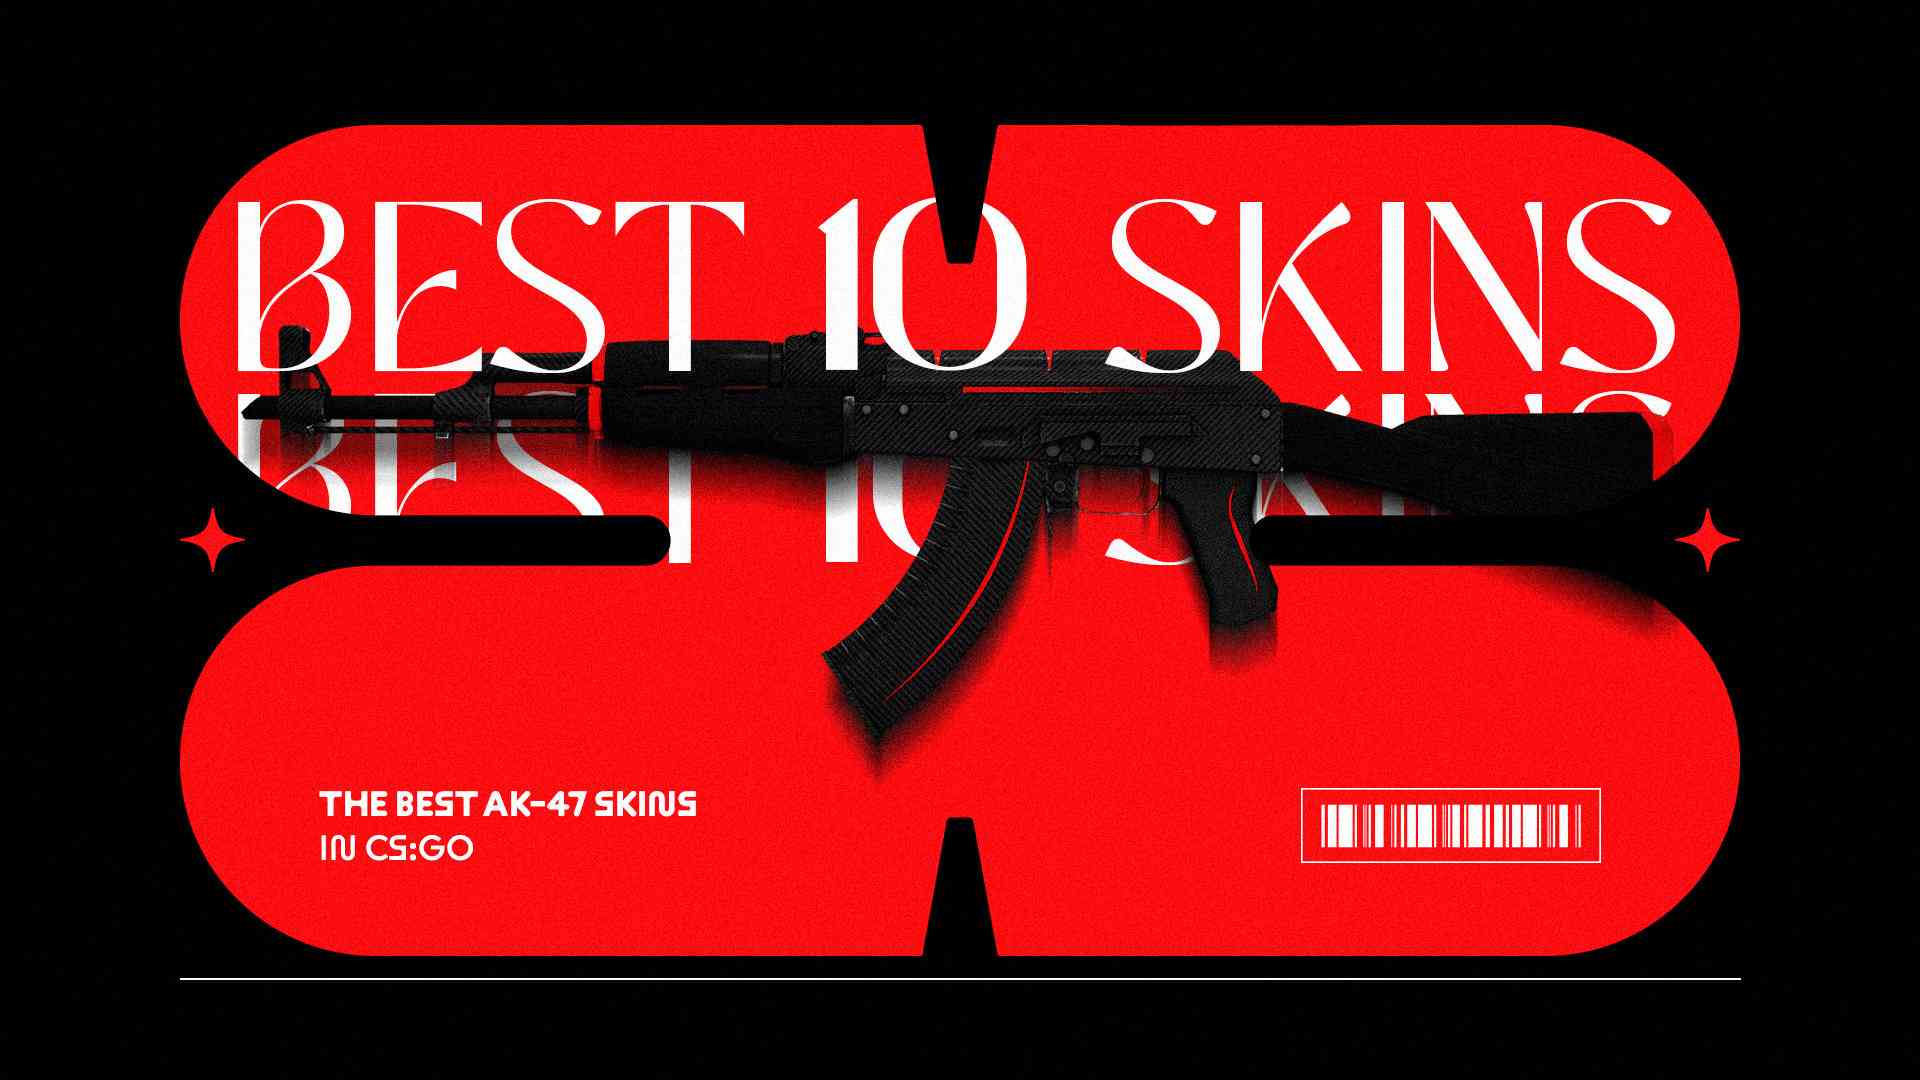 CSGO Skin Prices Go Wild After Counter-Strike 2 Reveal